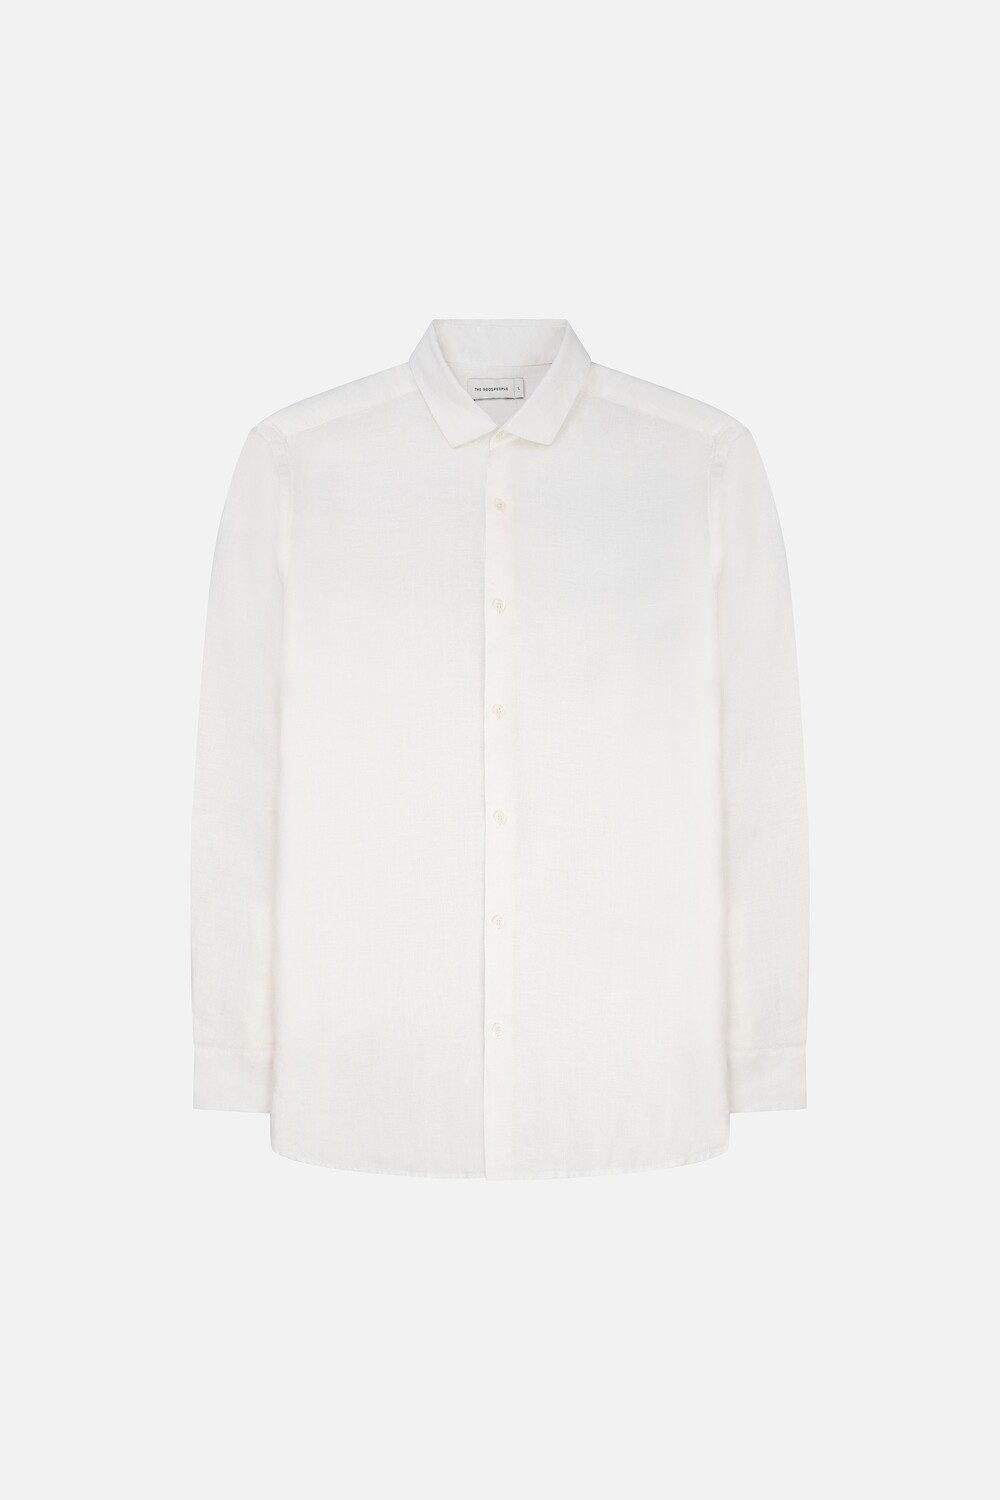 The Goodpeople Shirt Soho 10000201 White